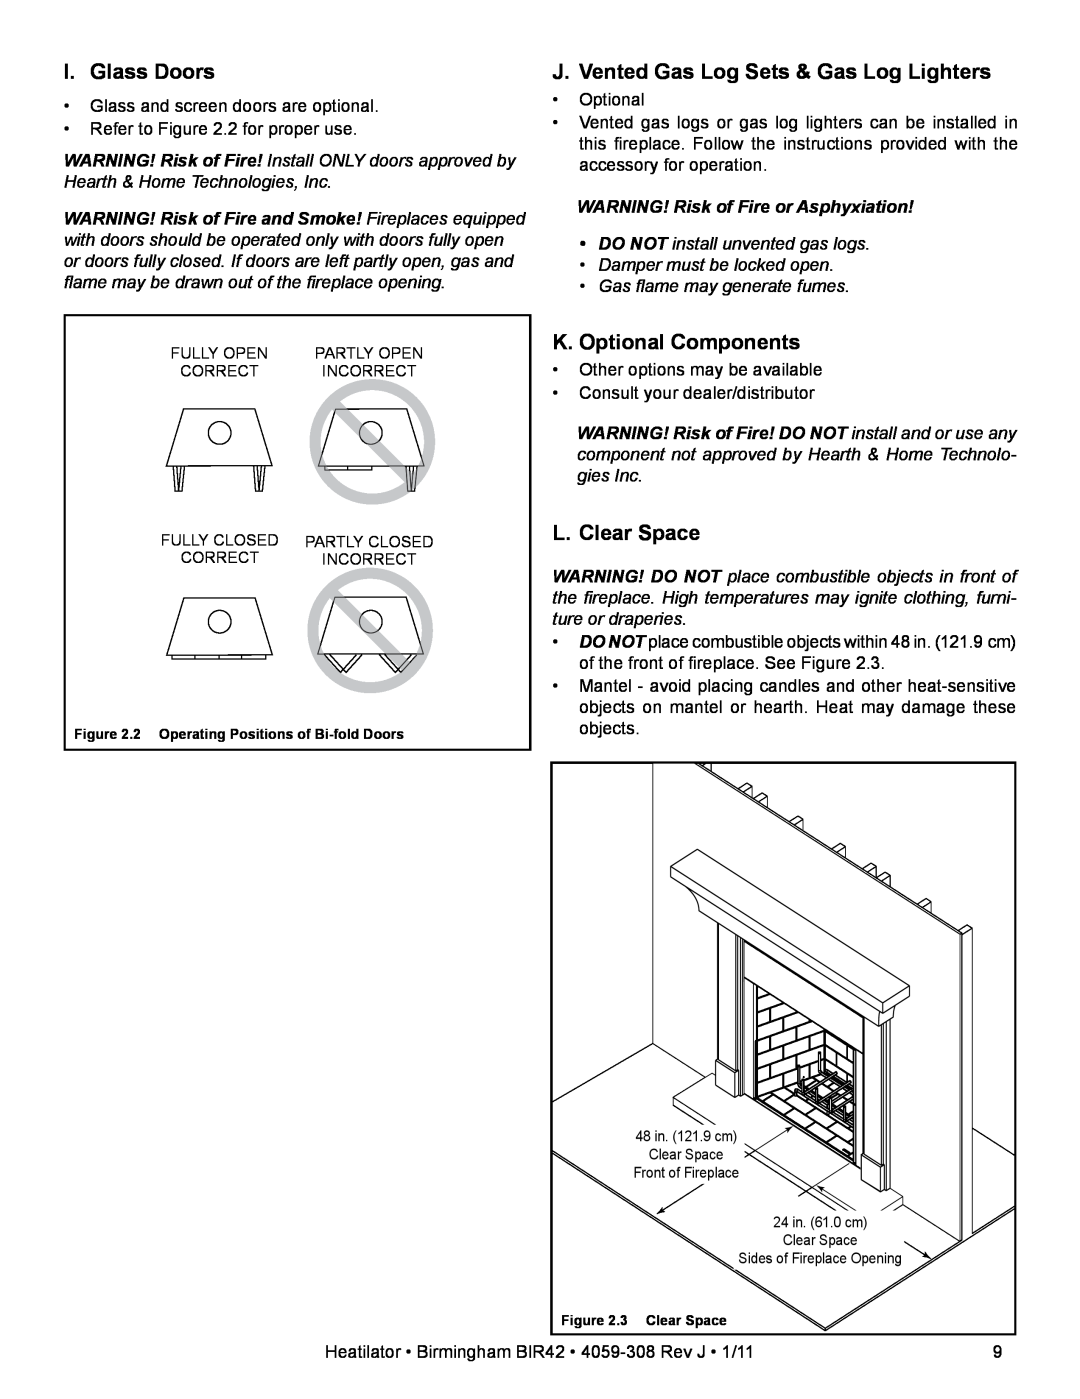 Heatiator BIR42 I. Glass Doors, J. Vented Gas Log Sets & Gas Log Lighters, K. Optional Components, L. Clear Space 